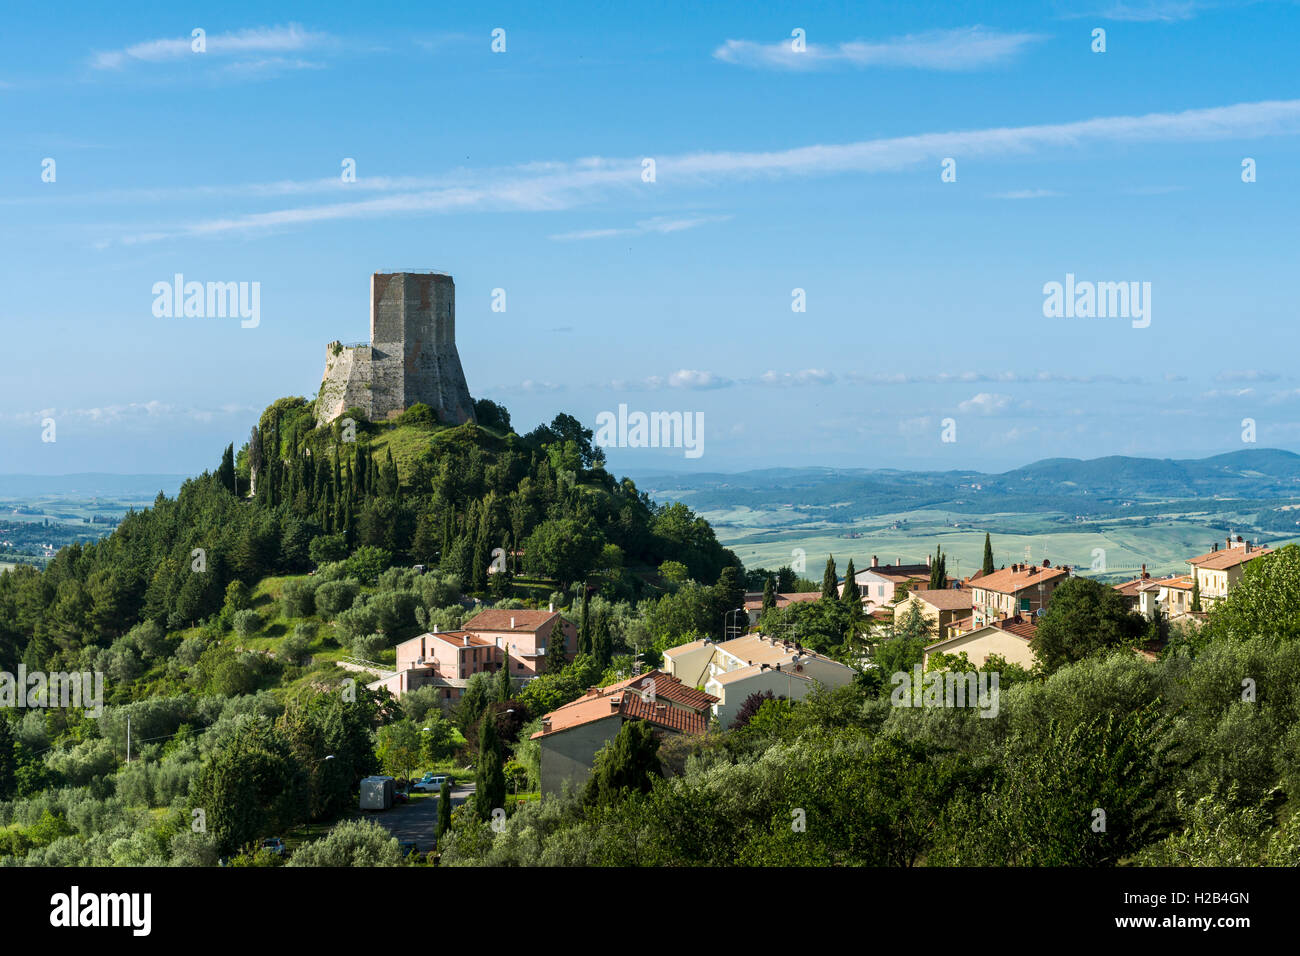 Typische toskanische Landschaft im Val d'Orcia mit der Burg Rocca d'Orcia Rocca di Tentennano, Castiglione d'Orcia, Toskana Stockfoto